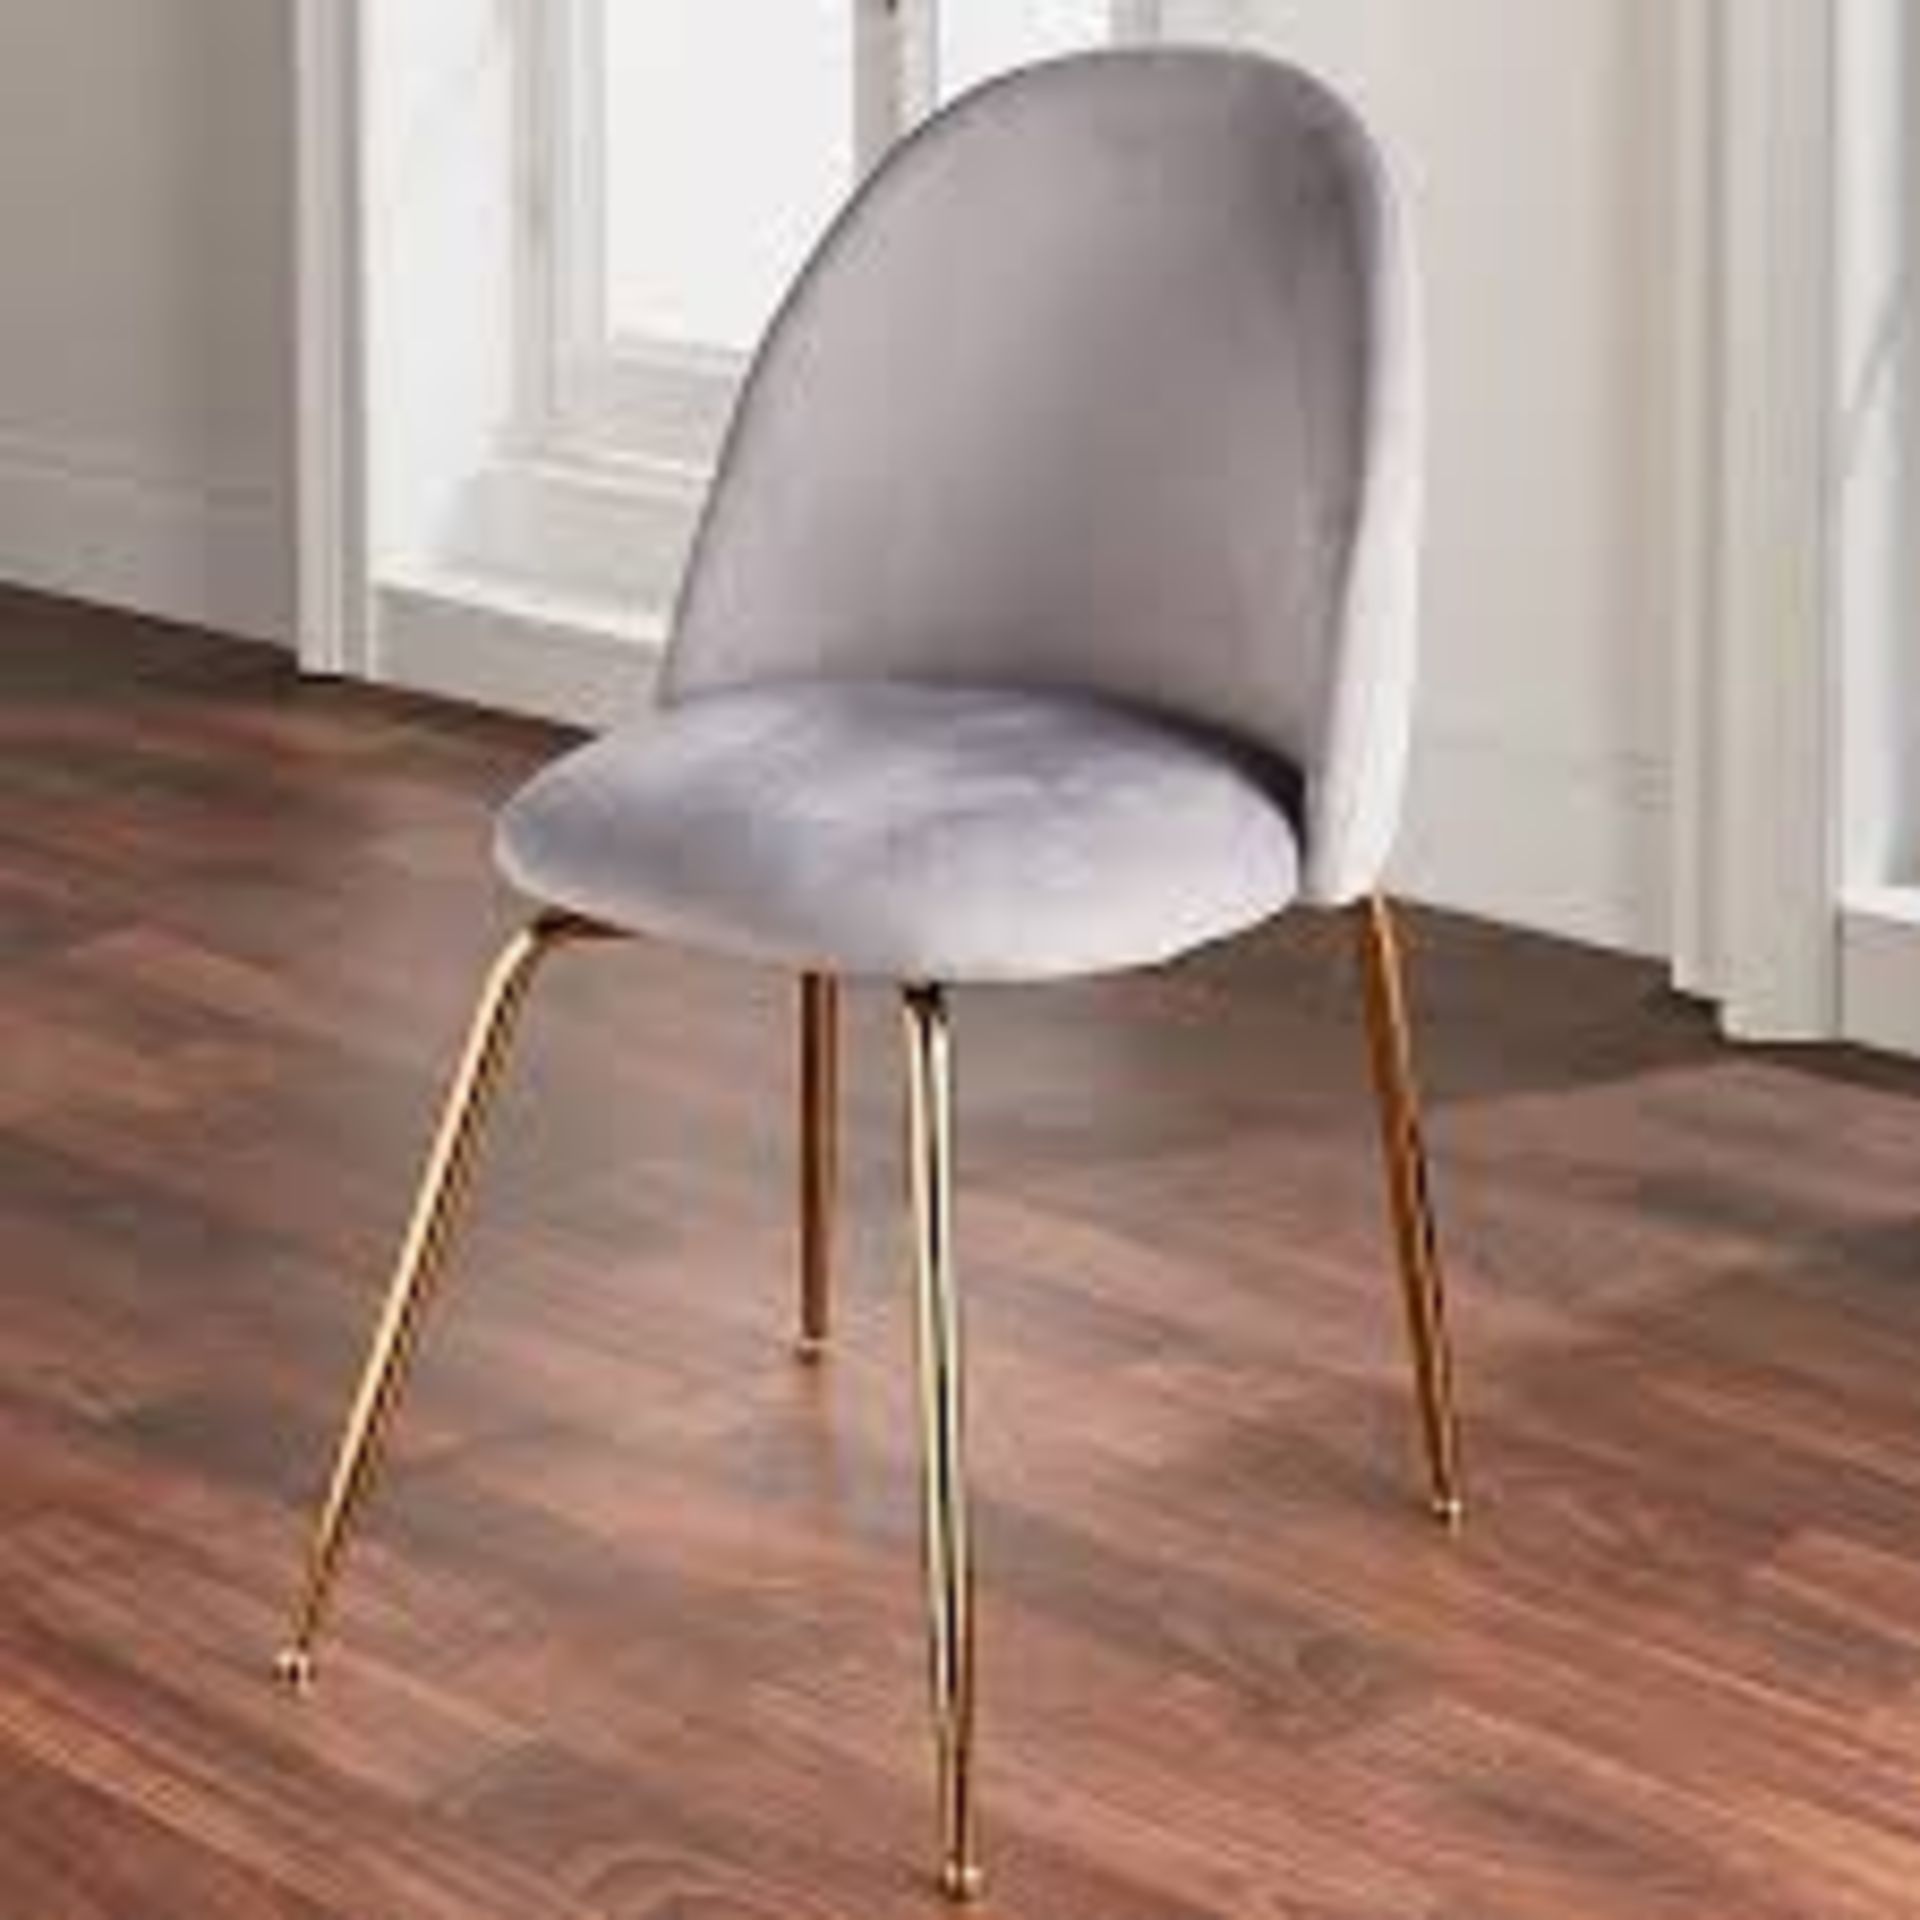 3 X Brand New Velvet Dining Chairs - Gold Legs (set of 2) rrp £480 per set